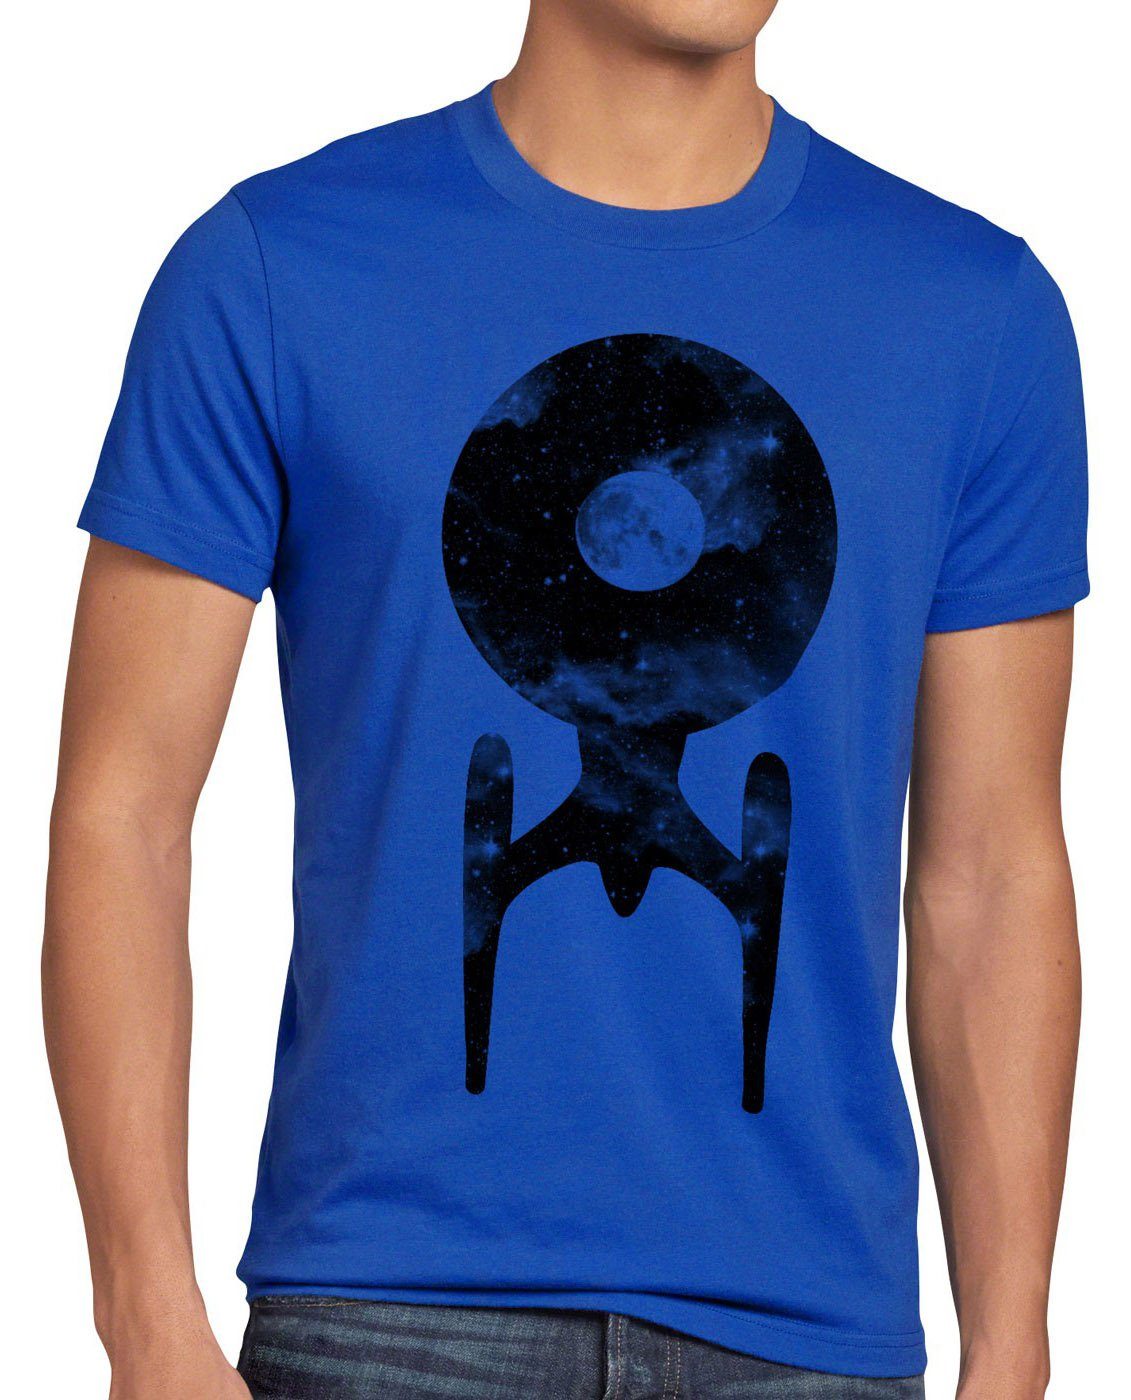 style3 Print-Shirt Herren trekkie T-Shirt uss Trek trekkie enterprise blau Raumschiff ncc-1701-d star